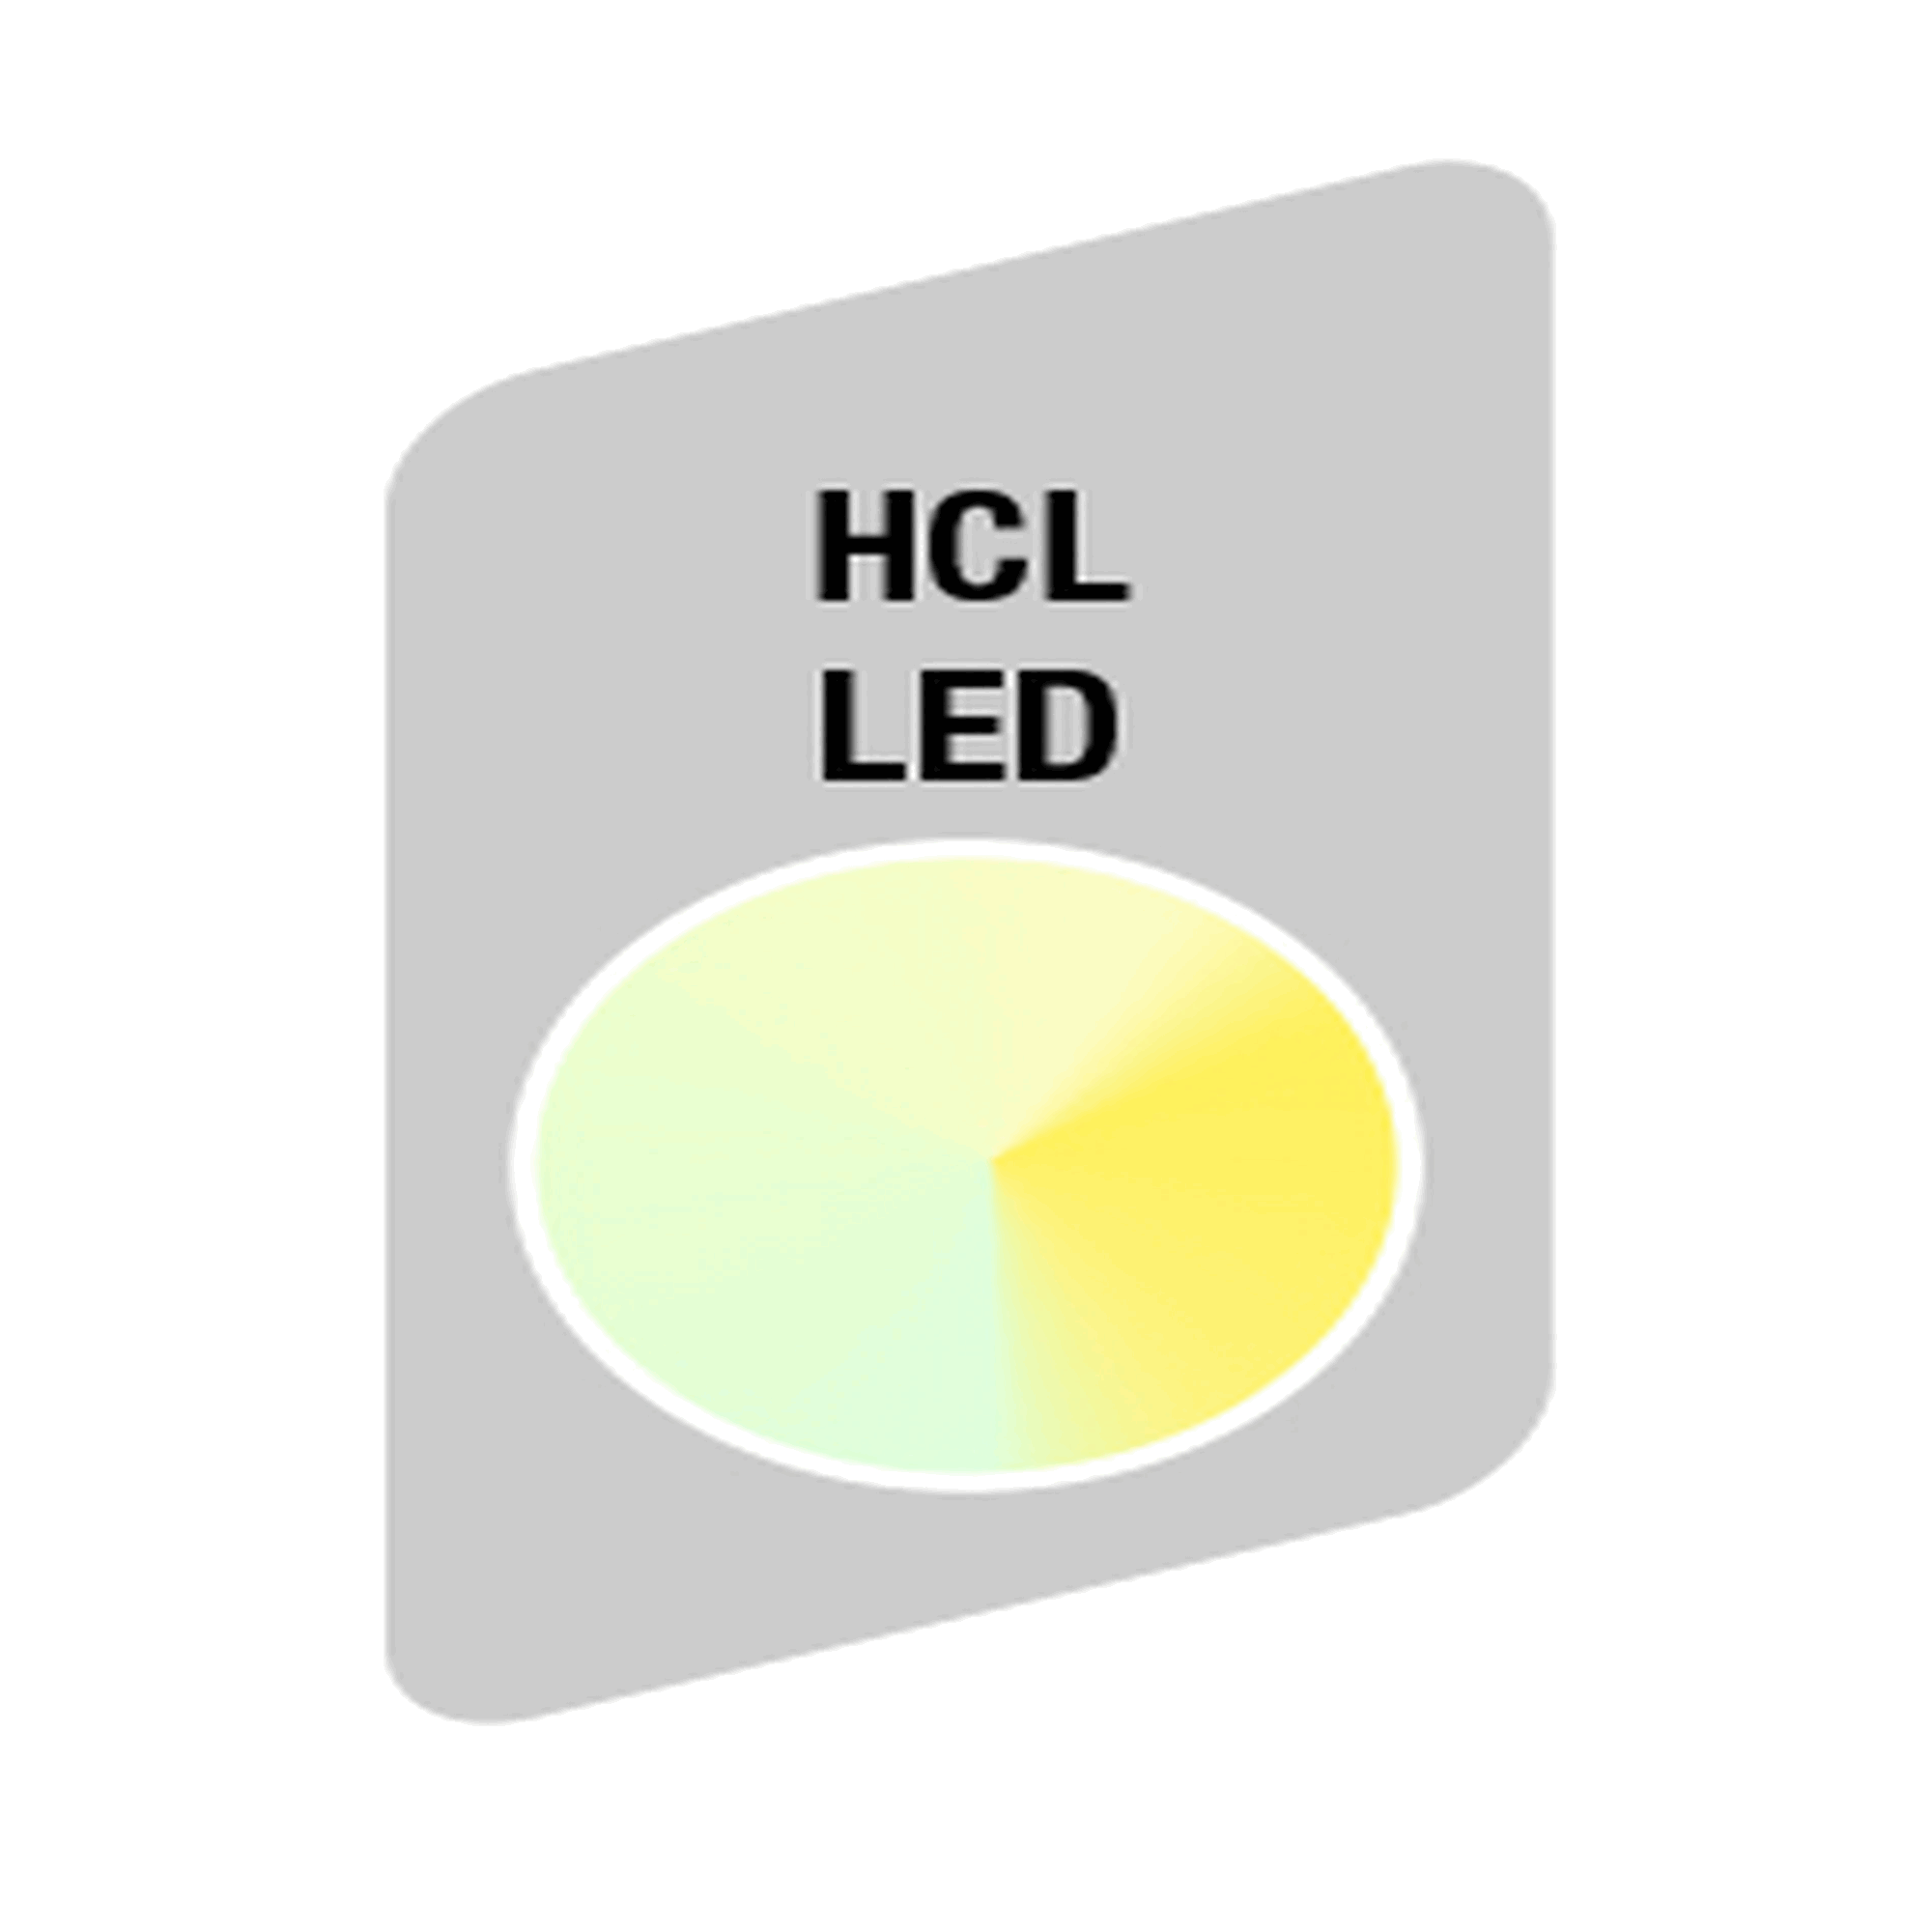 LED-Aufbauleuchte 301006TF weiß 62 x 62 x 5,4 cm + product picture